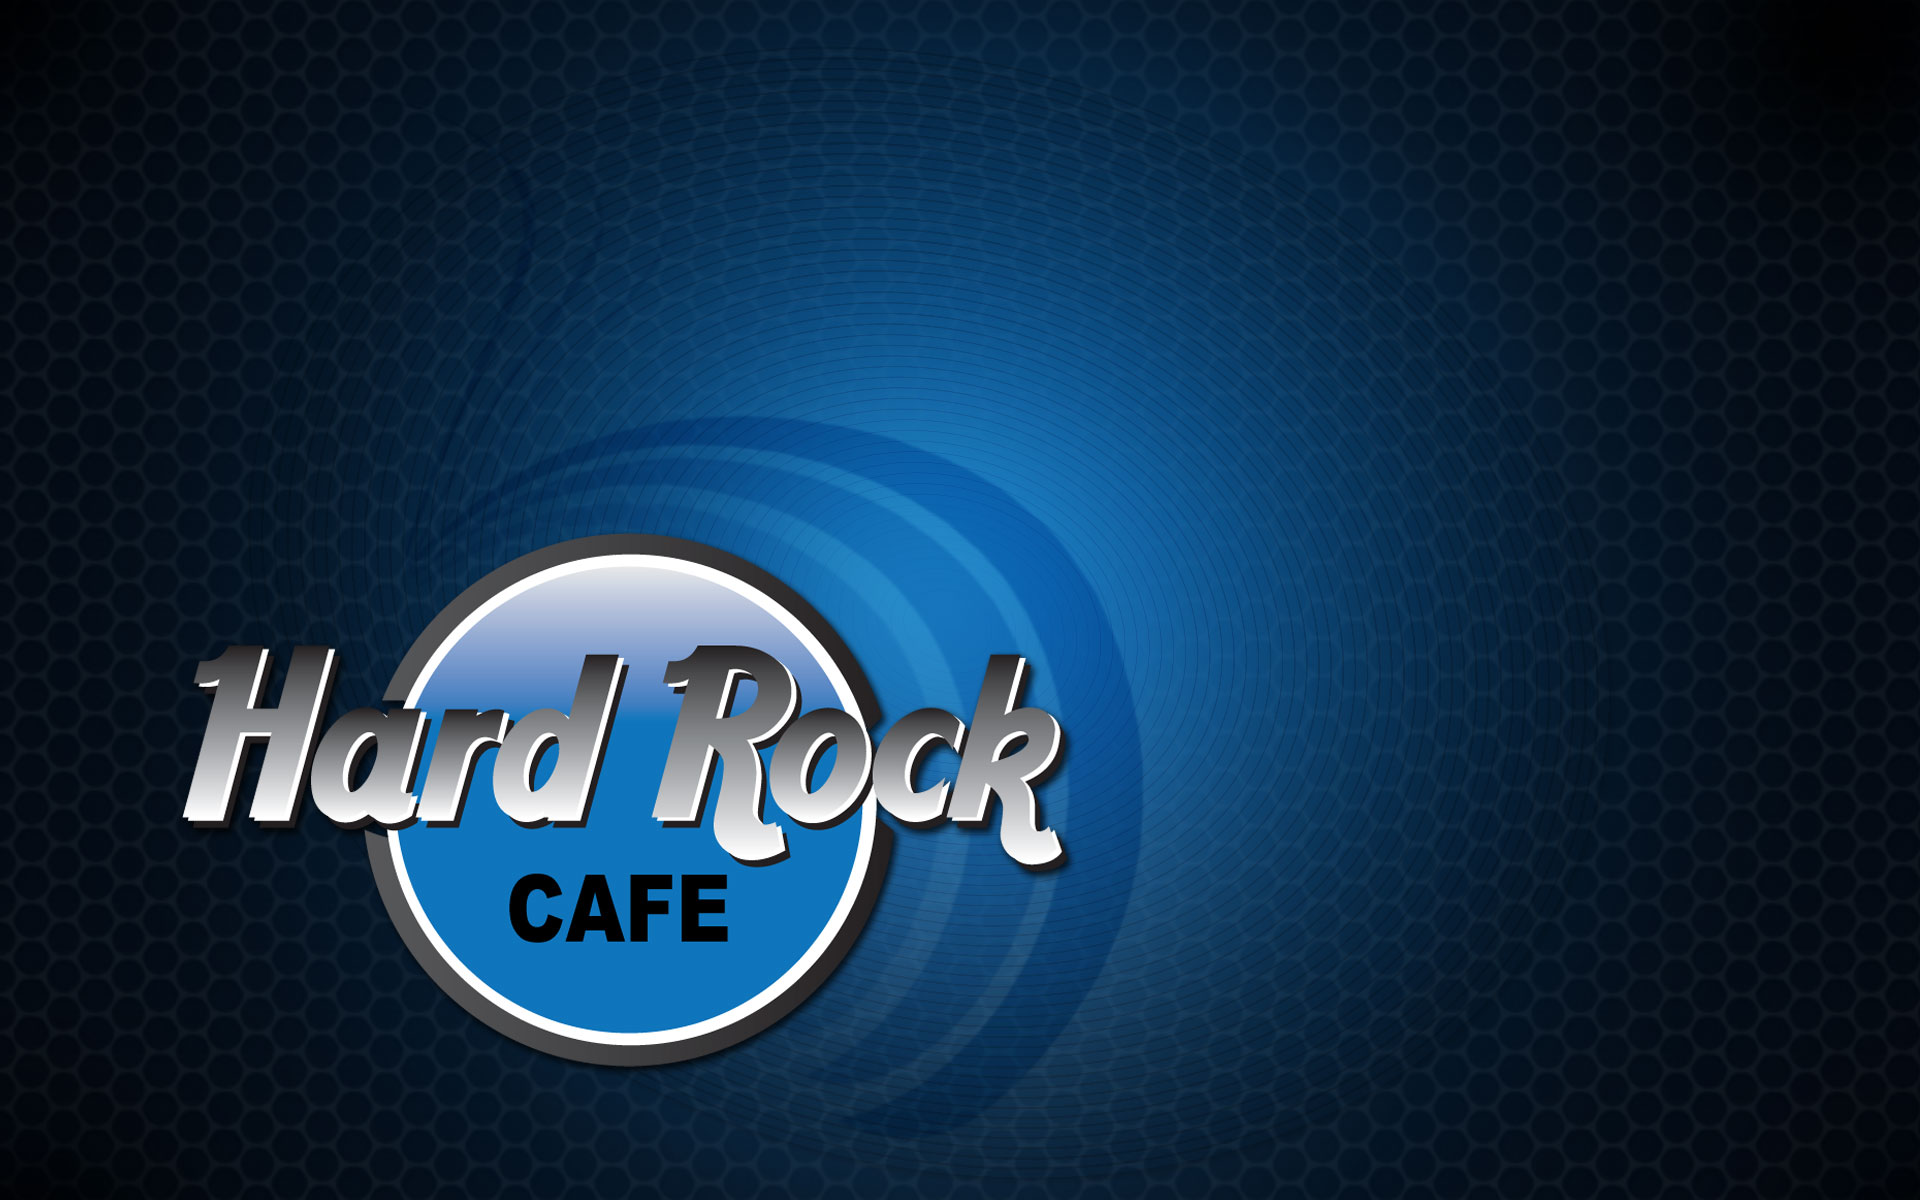 Hard Rock Cafe Wallpaper